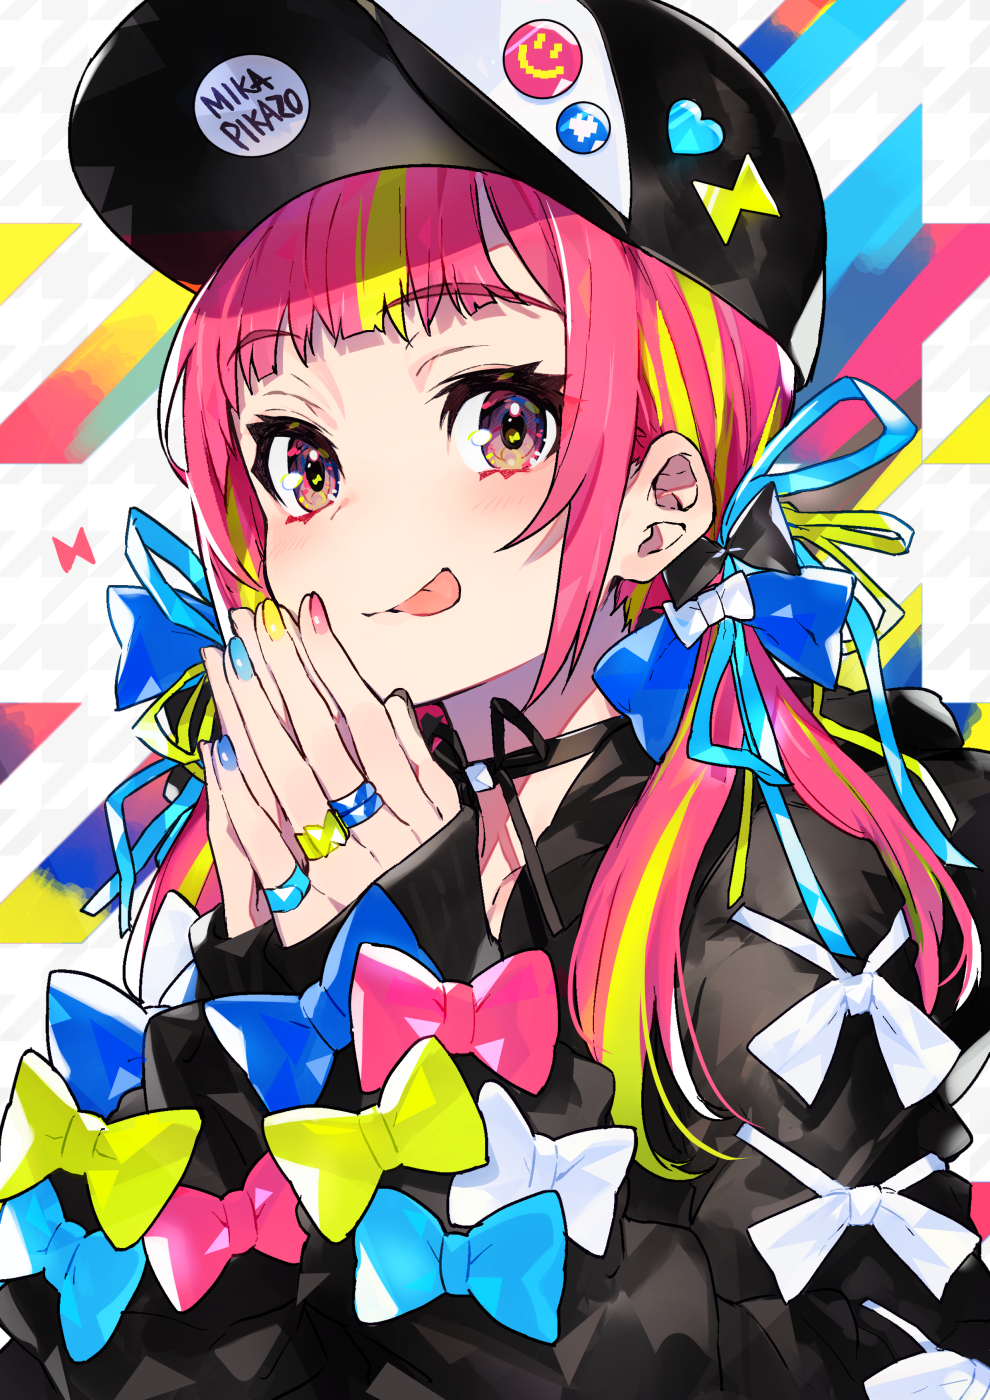 Anime 990x1400 anime anime girls digital art artwork 2D portrait display mika pikazo baseball cap pink hair tongue out